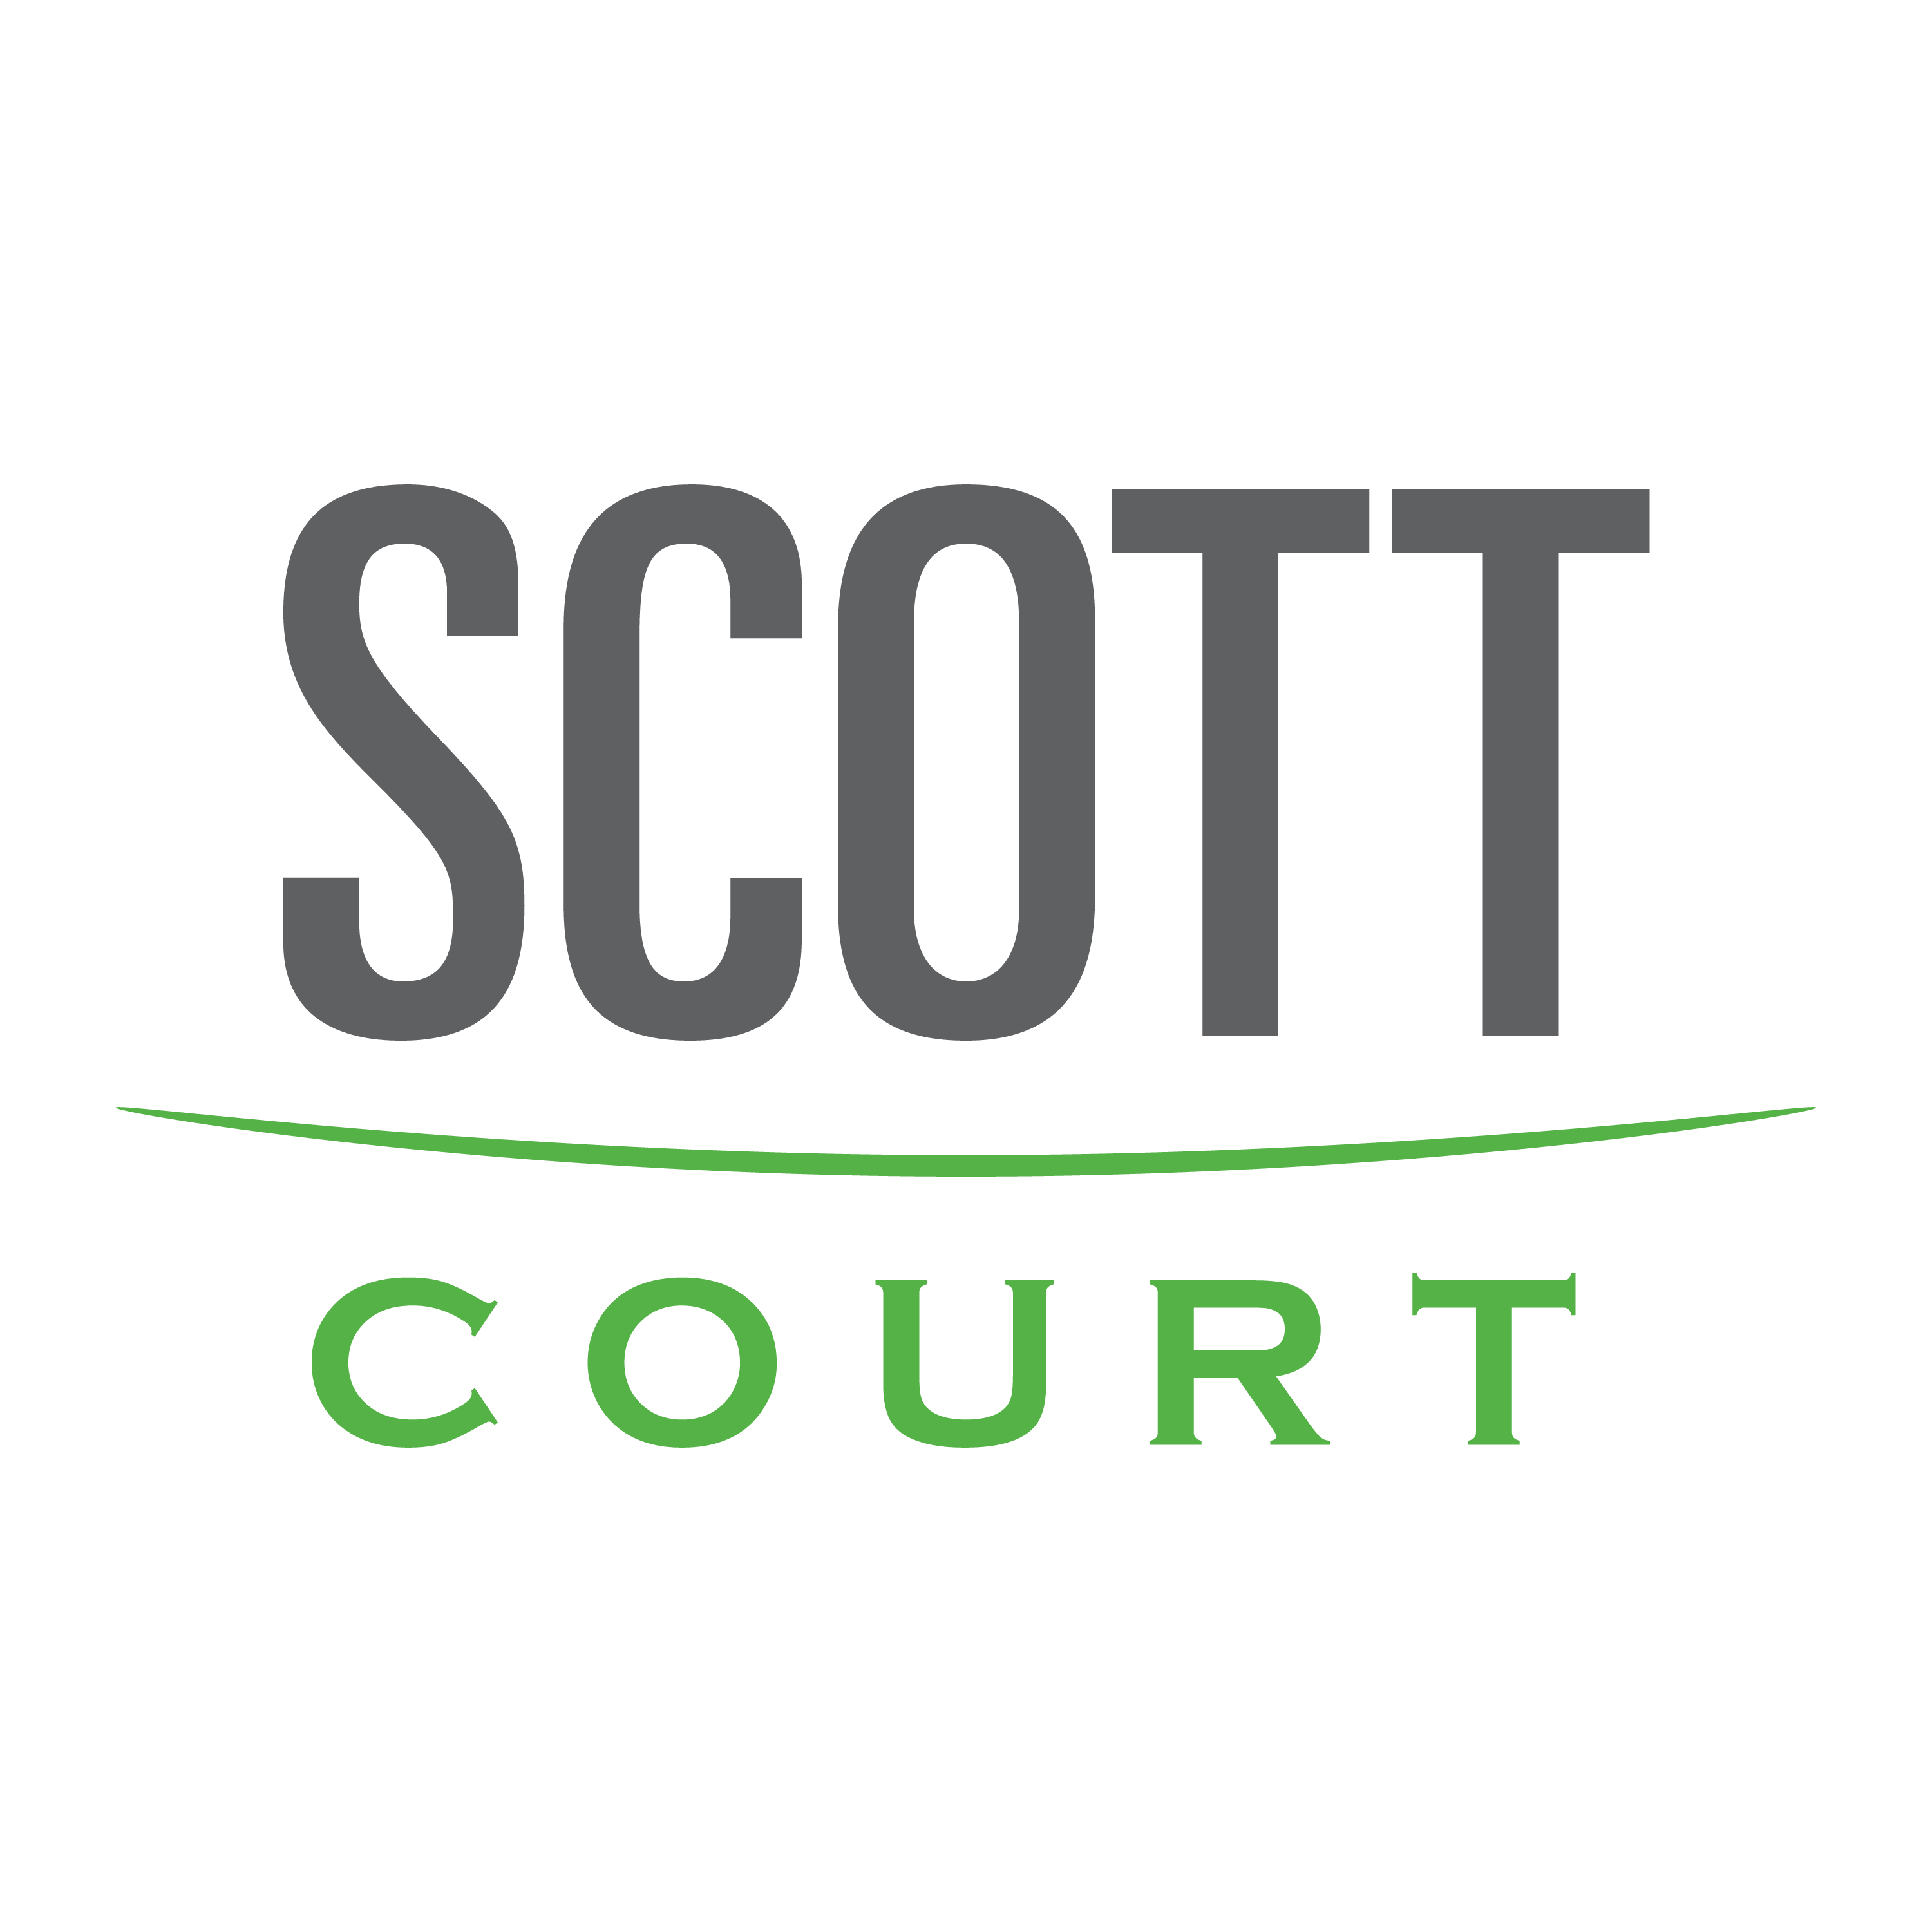 Scott Court